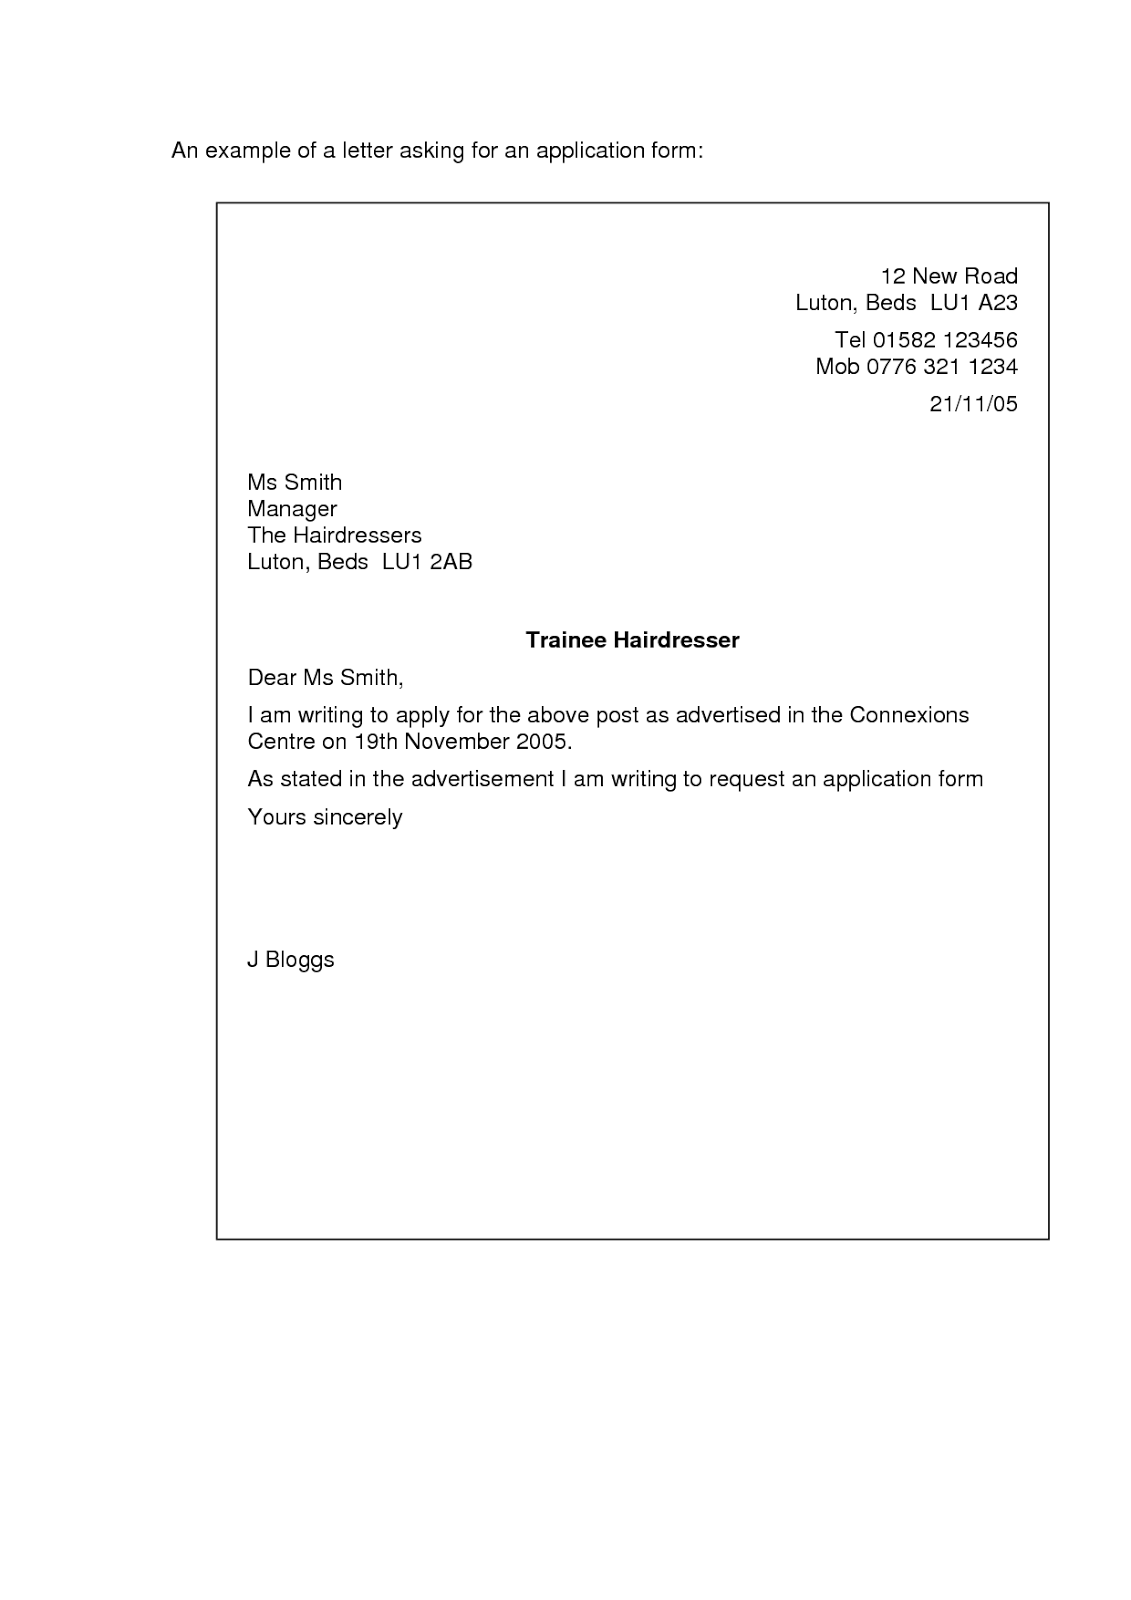 Sample application letter for employment